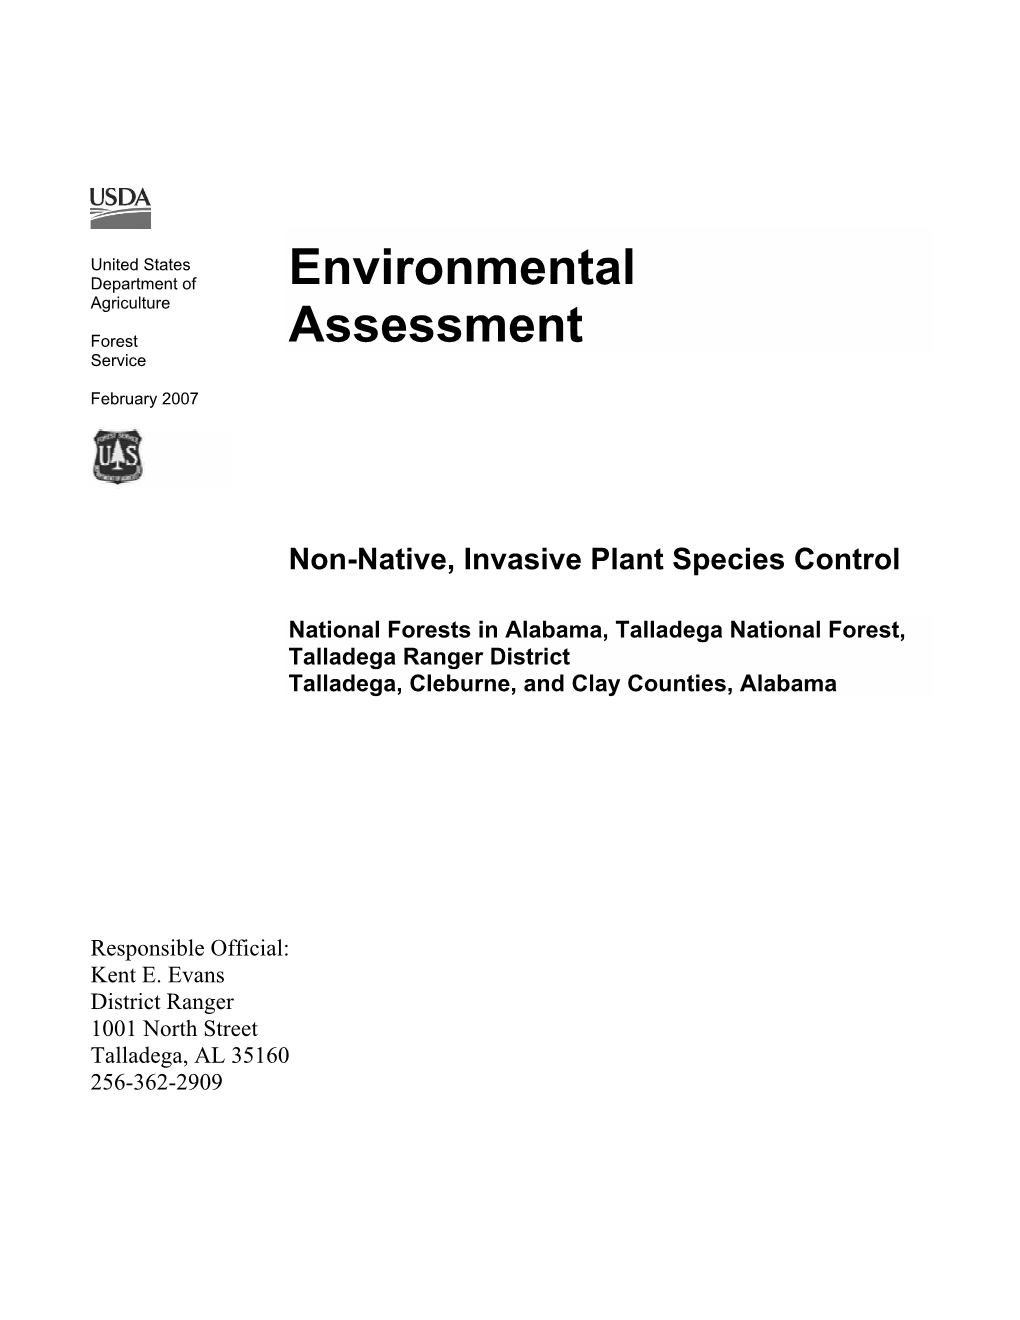 Environmental Assessment Invasive Plant Species Control